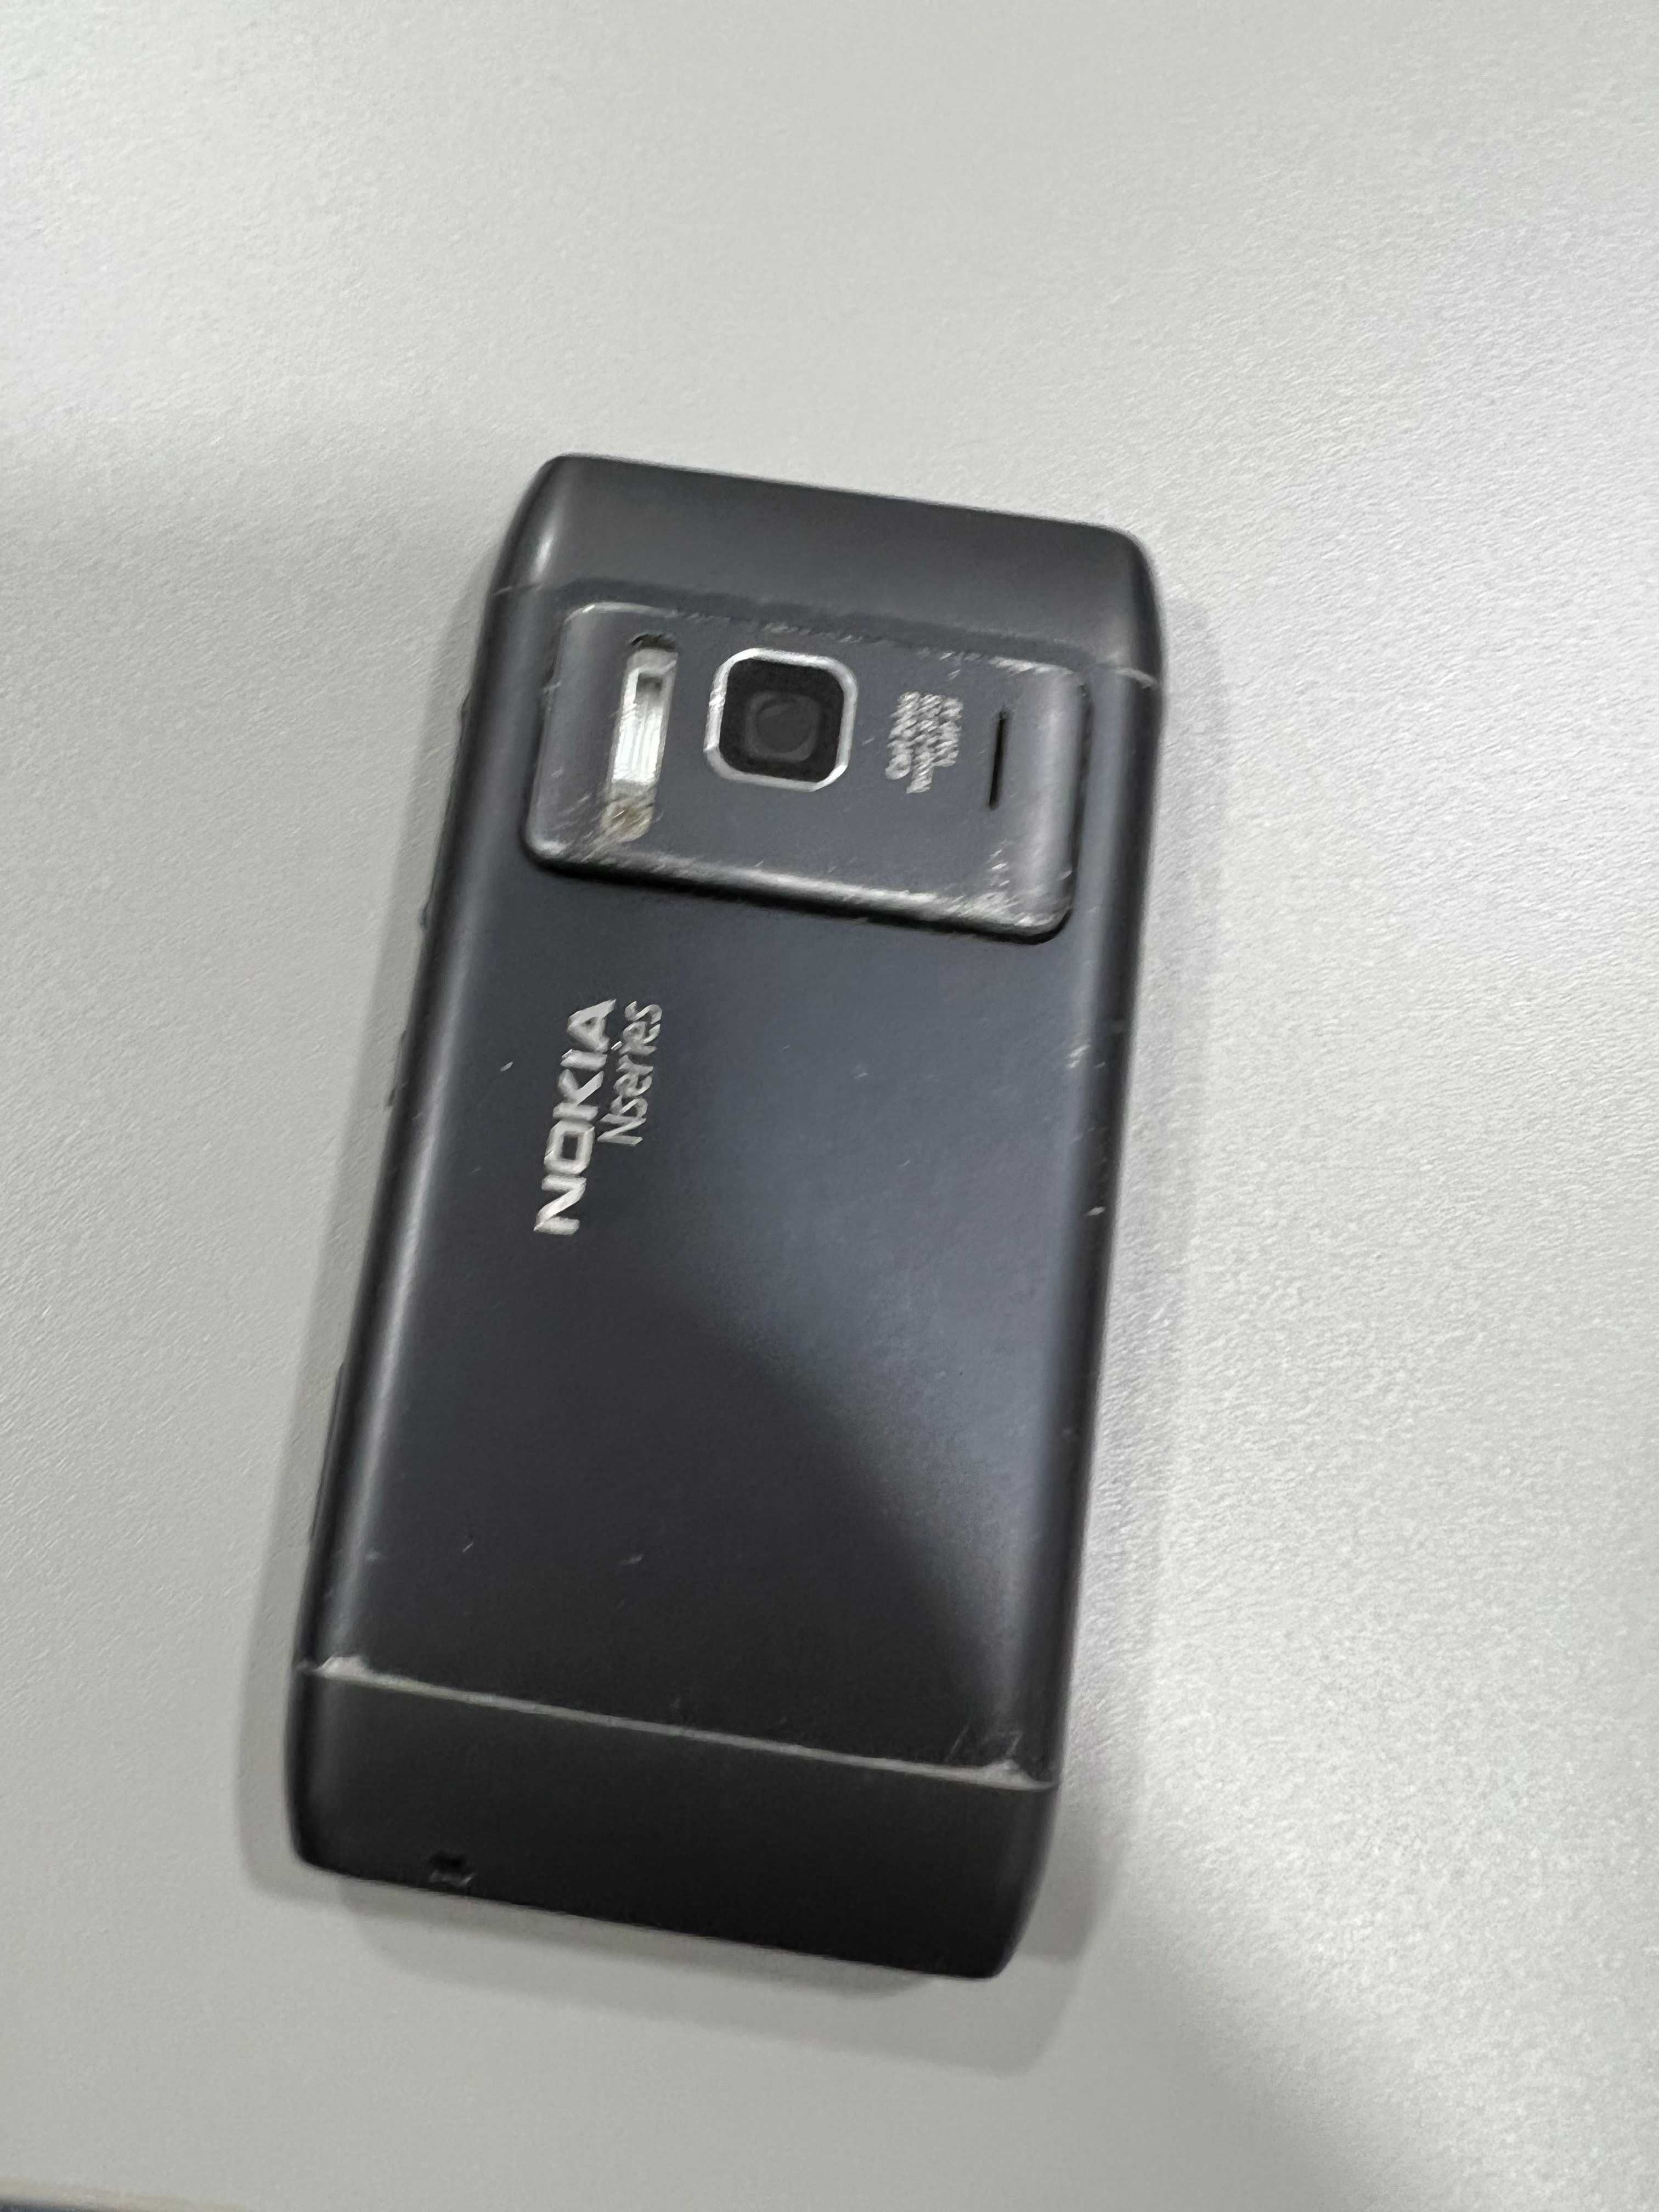 Telemóvel Nokia N8